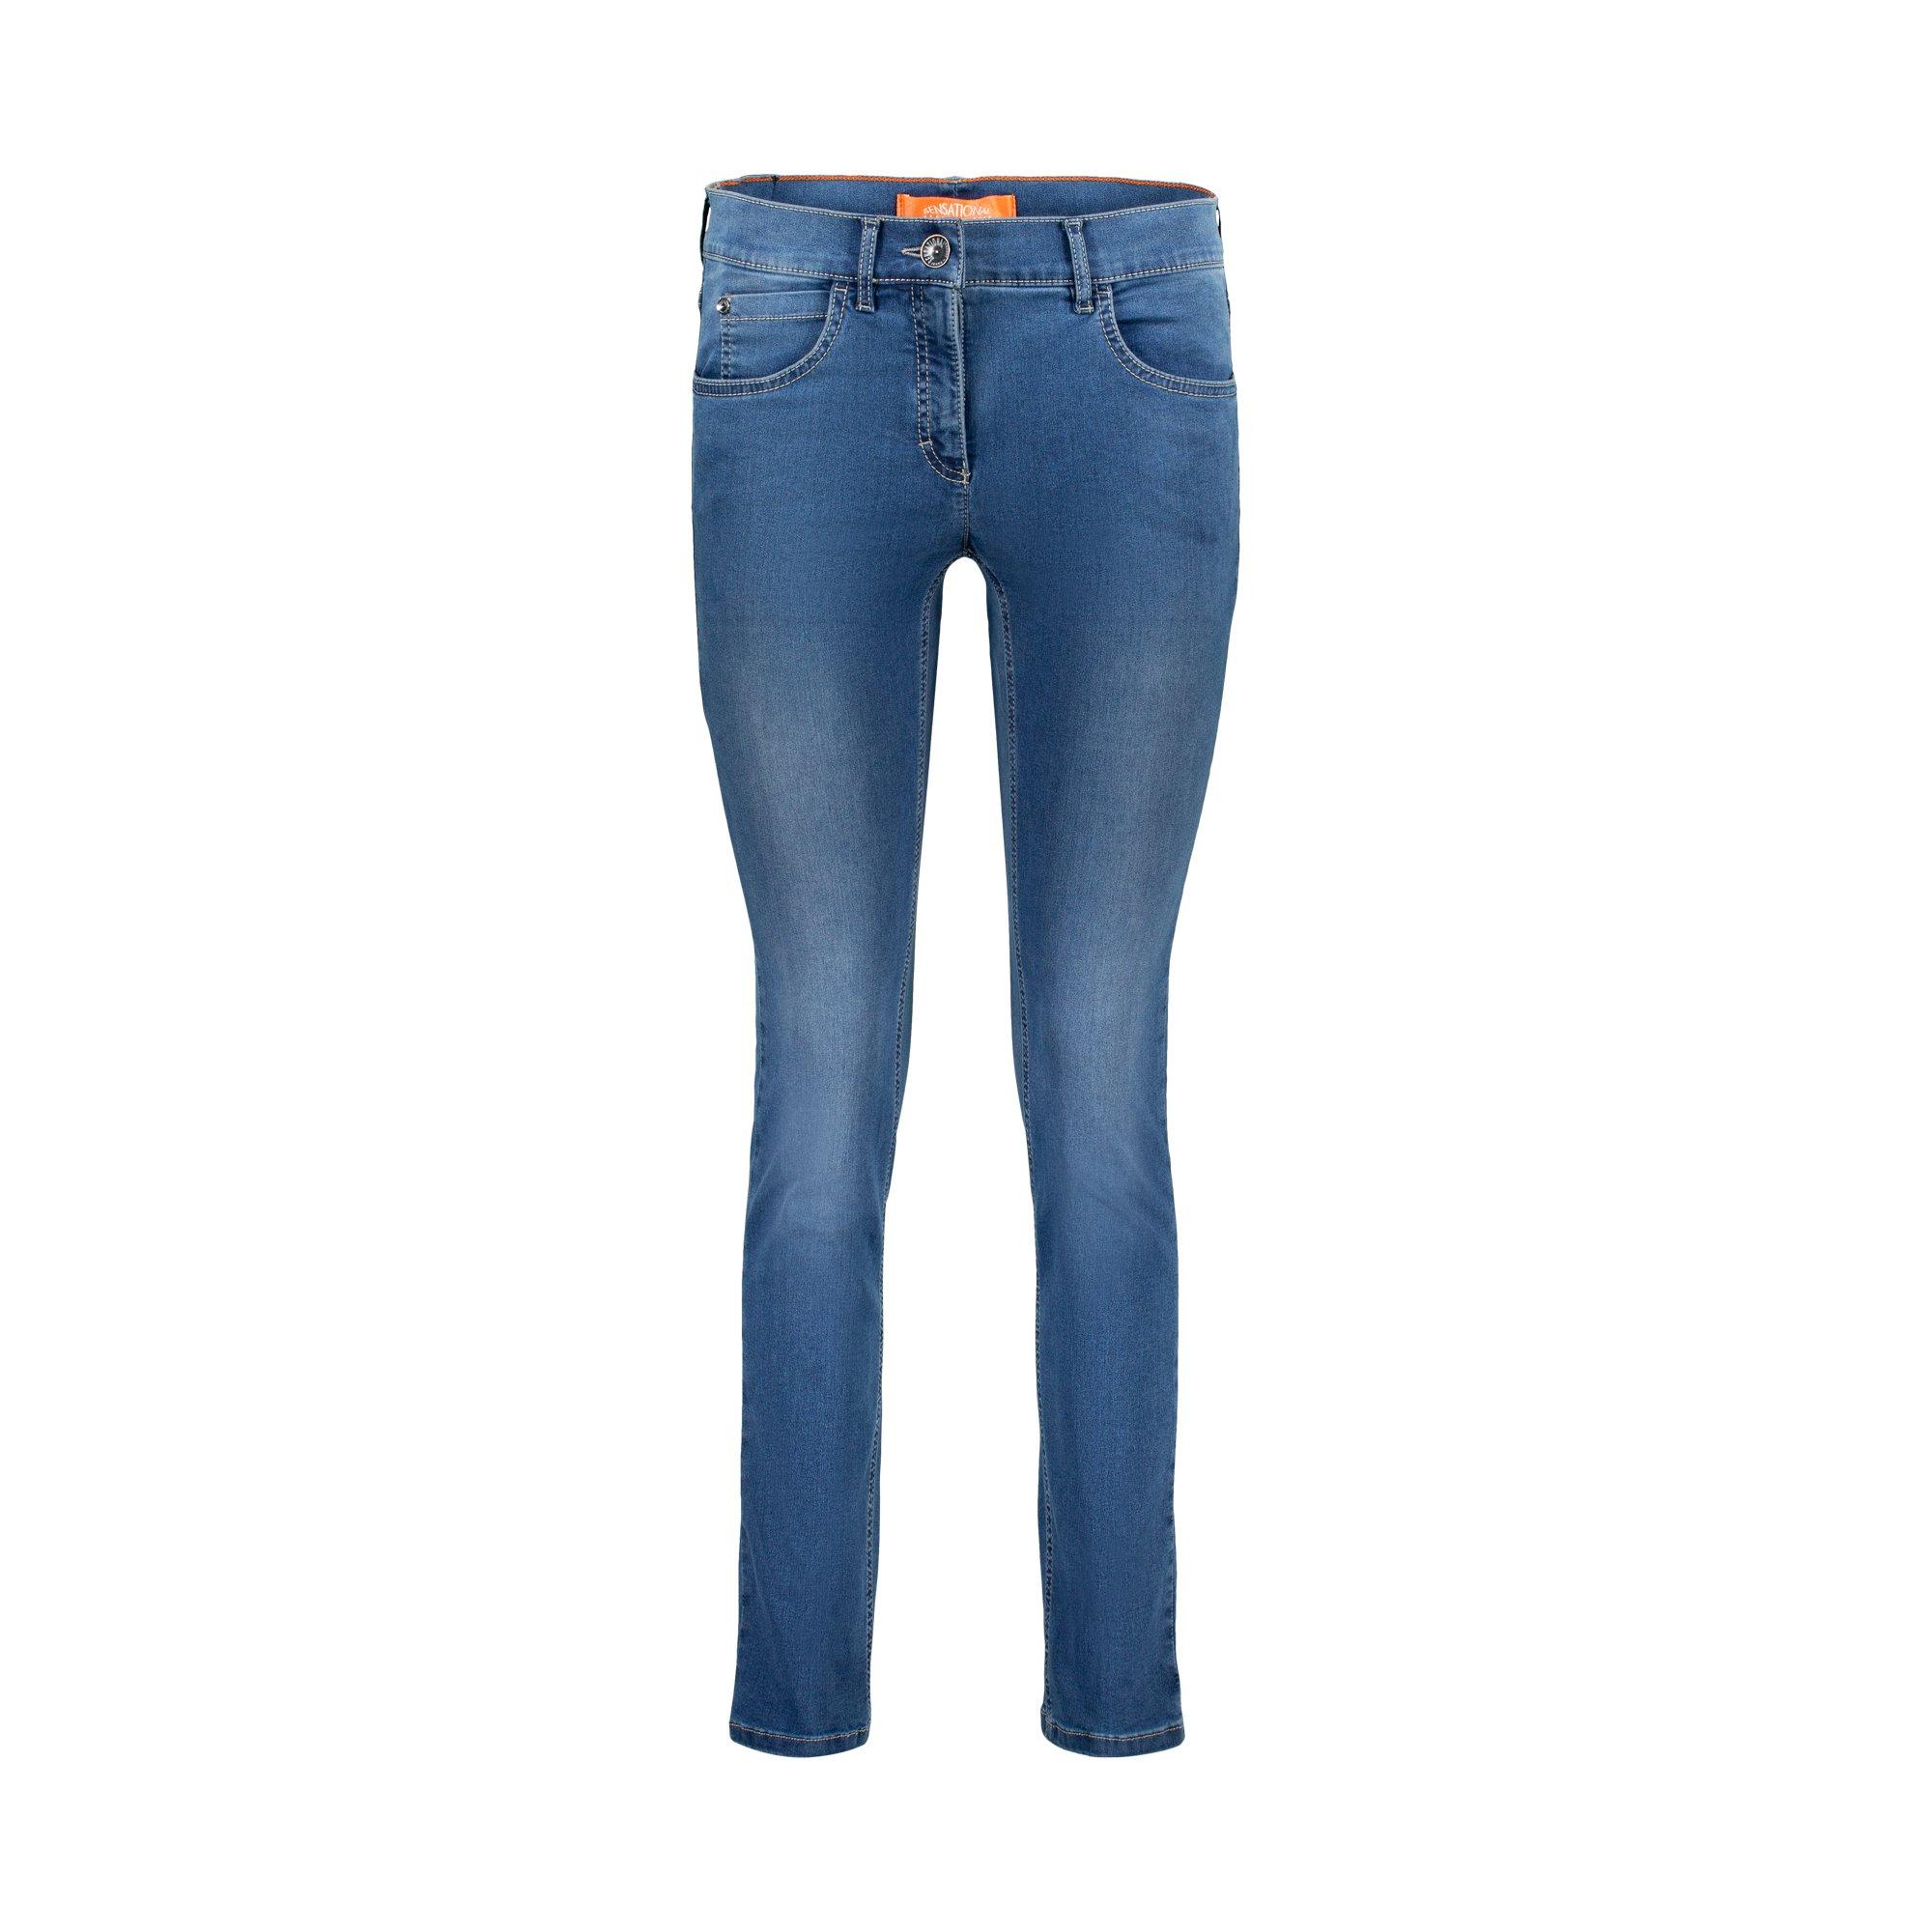 Image of ZERRES Jeans Slim Fit - L30/W34